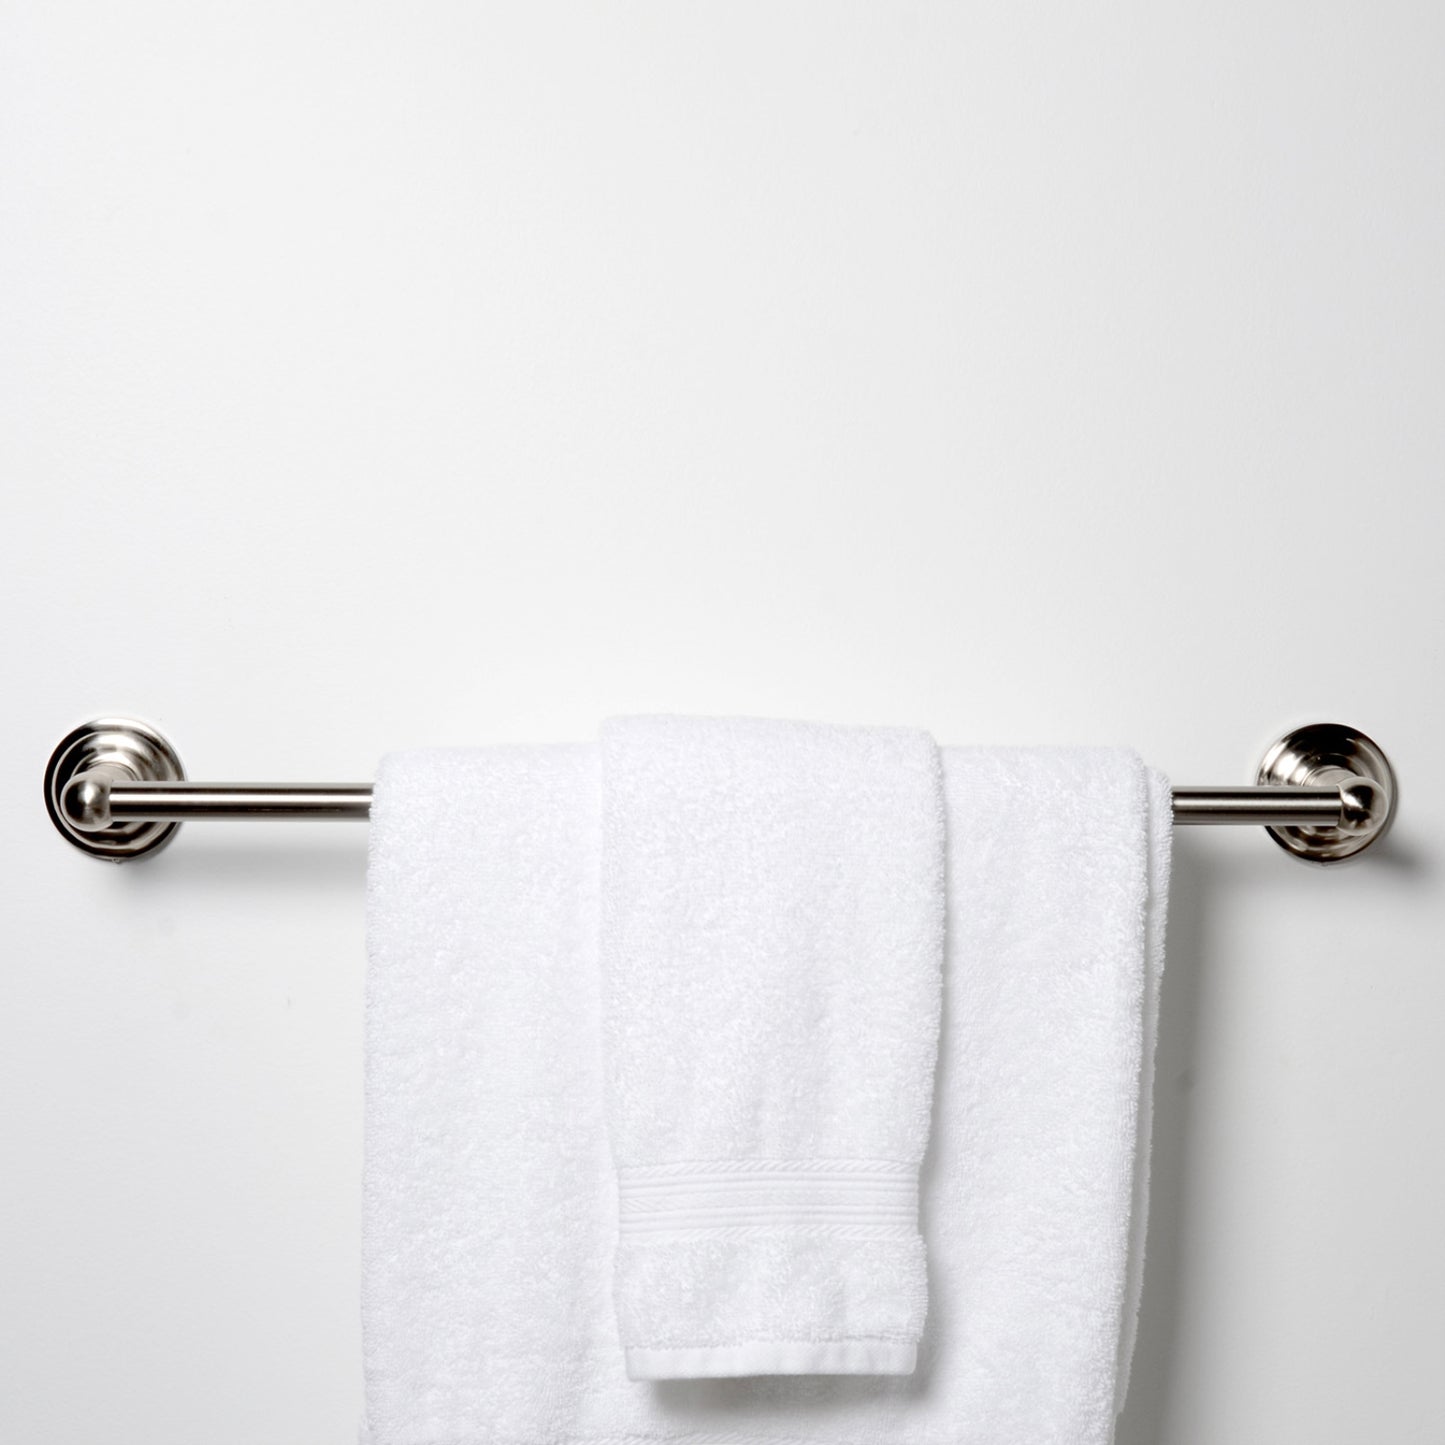 South Main Hardware Traditional Towel Bar - 18-Inch